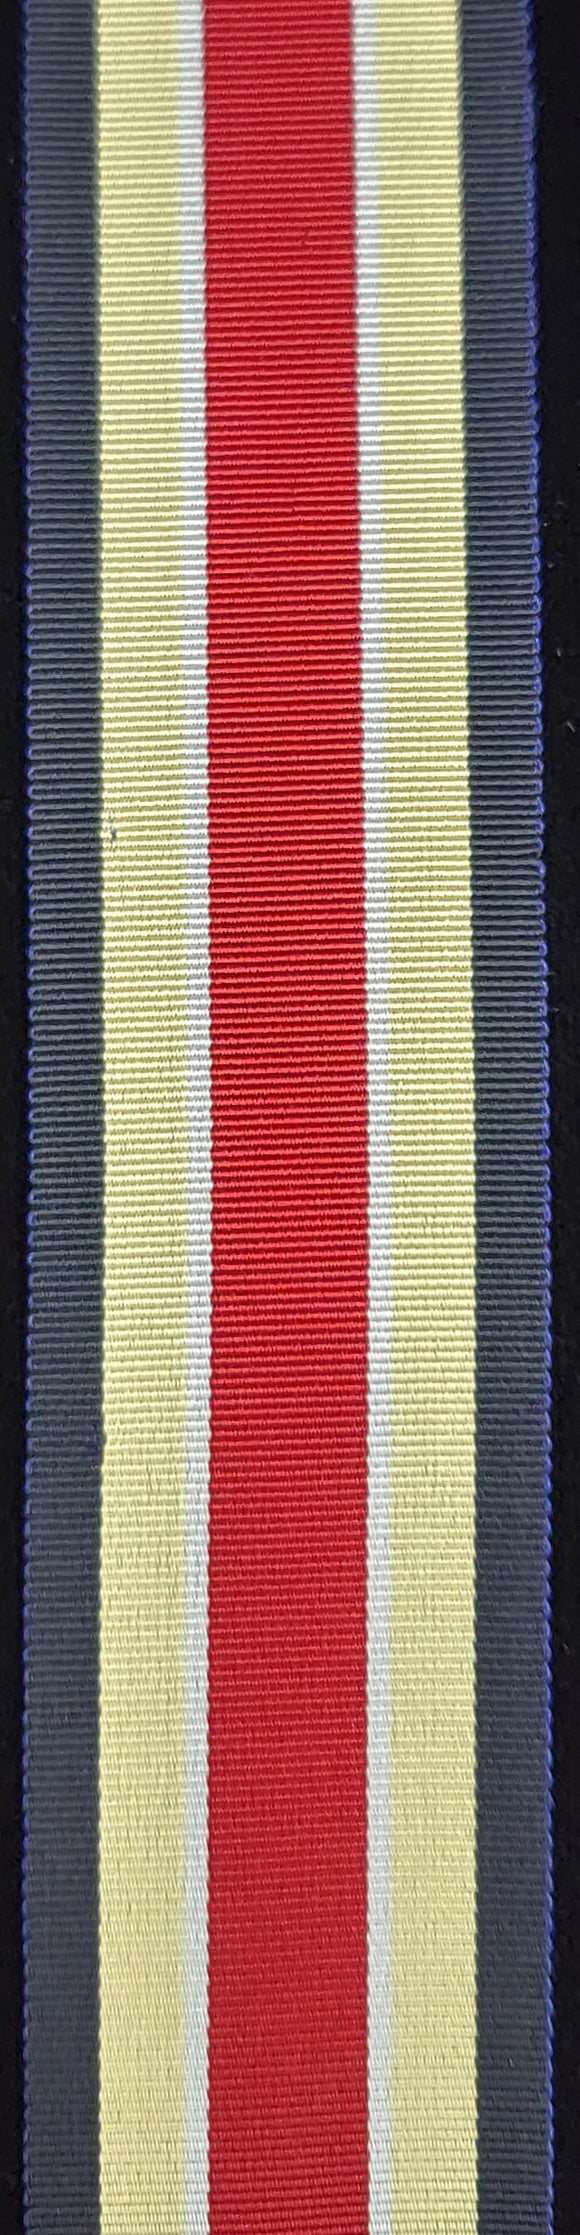 Ribbon, Ceylon Police Independence Medal